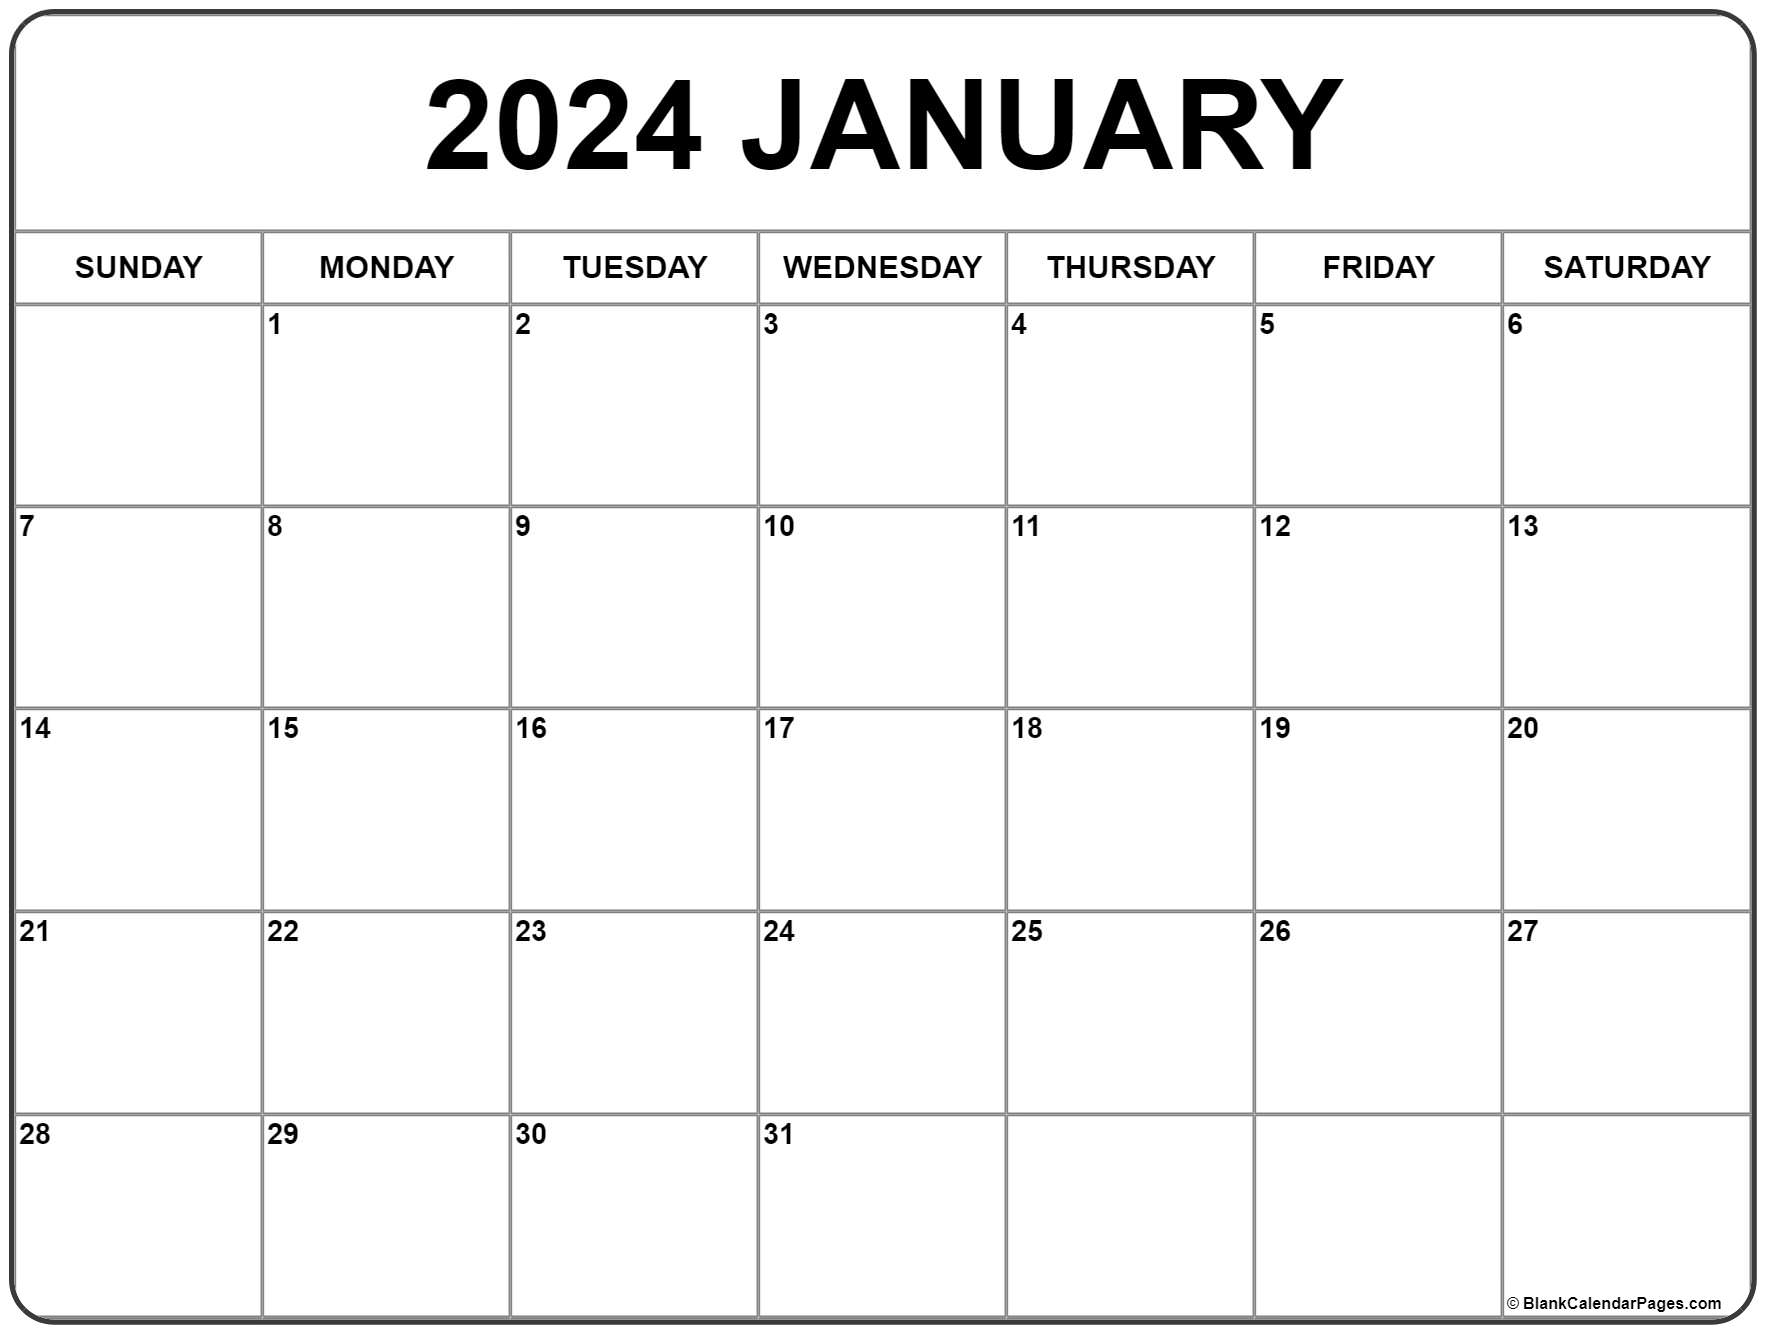 January 2024 Calendar | Free Printable Calendar for Free Printable January 2024 Calendar Page